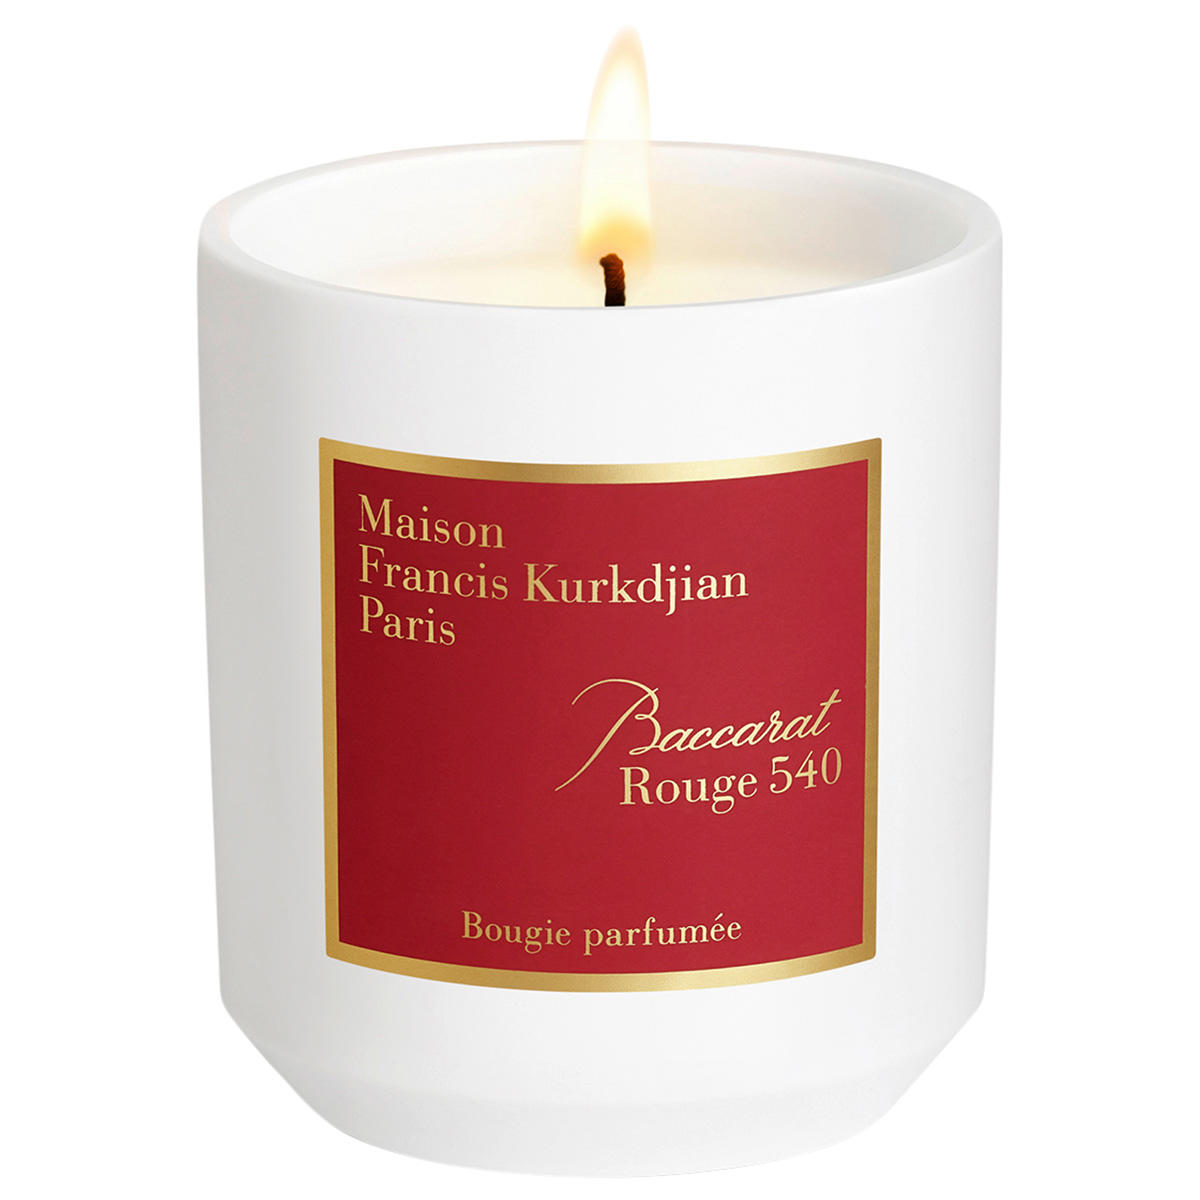 Maison Francis Kurkdjian Paris Baccarat Rouge 540 Candle 280 g - 1